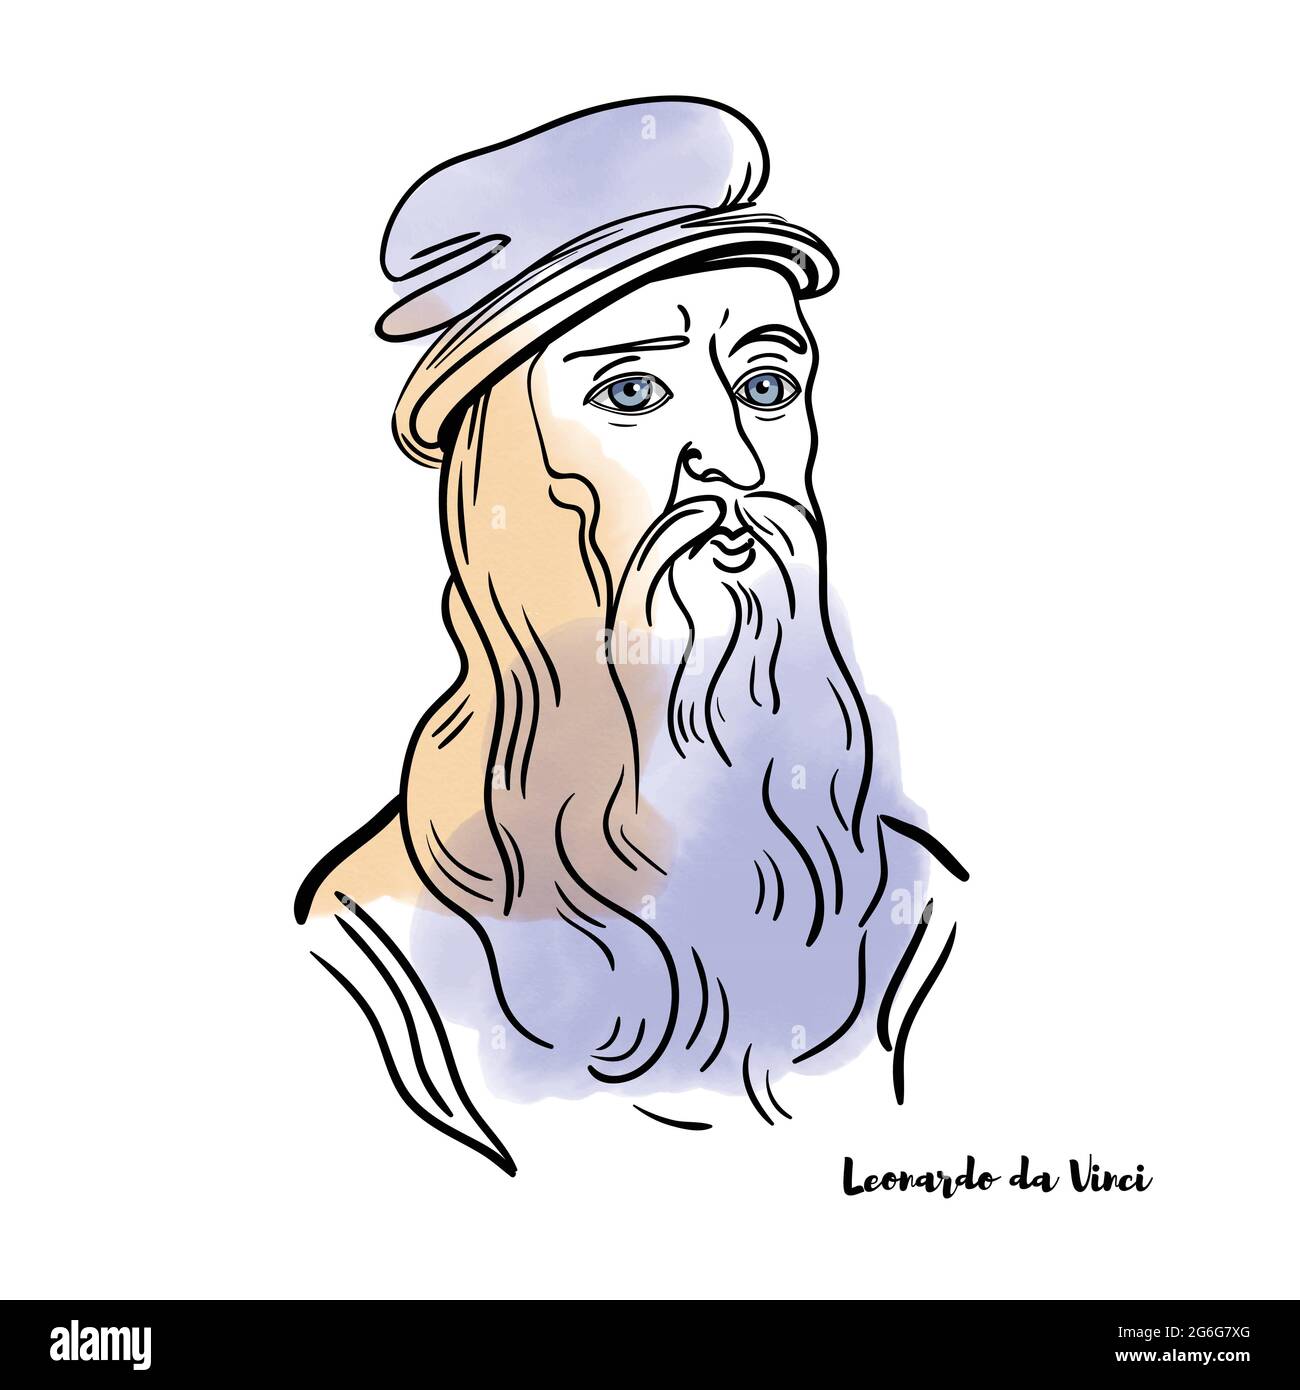 Famous artist Leonardo da Vinci vector hand drawn watercolor portrait with ink contours. Stock Vector